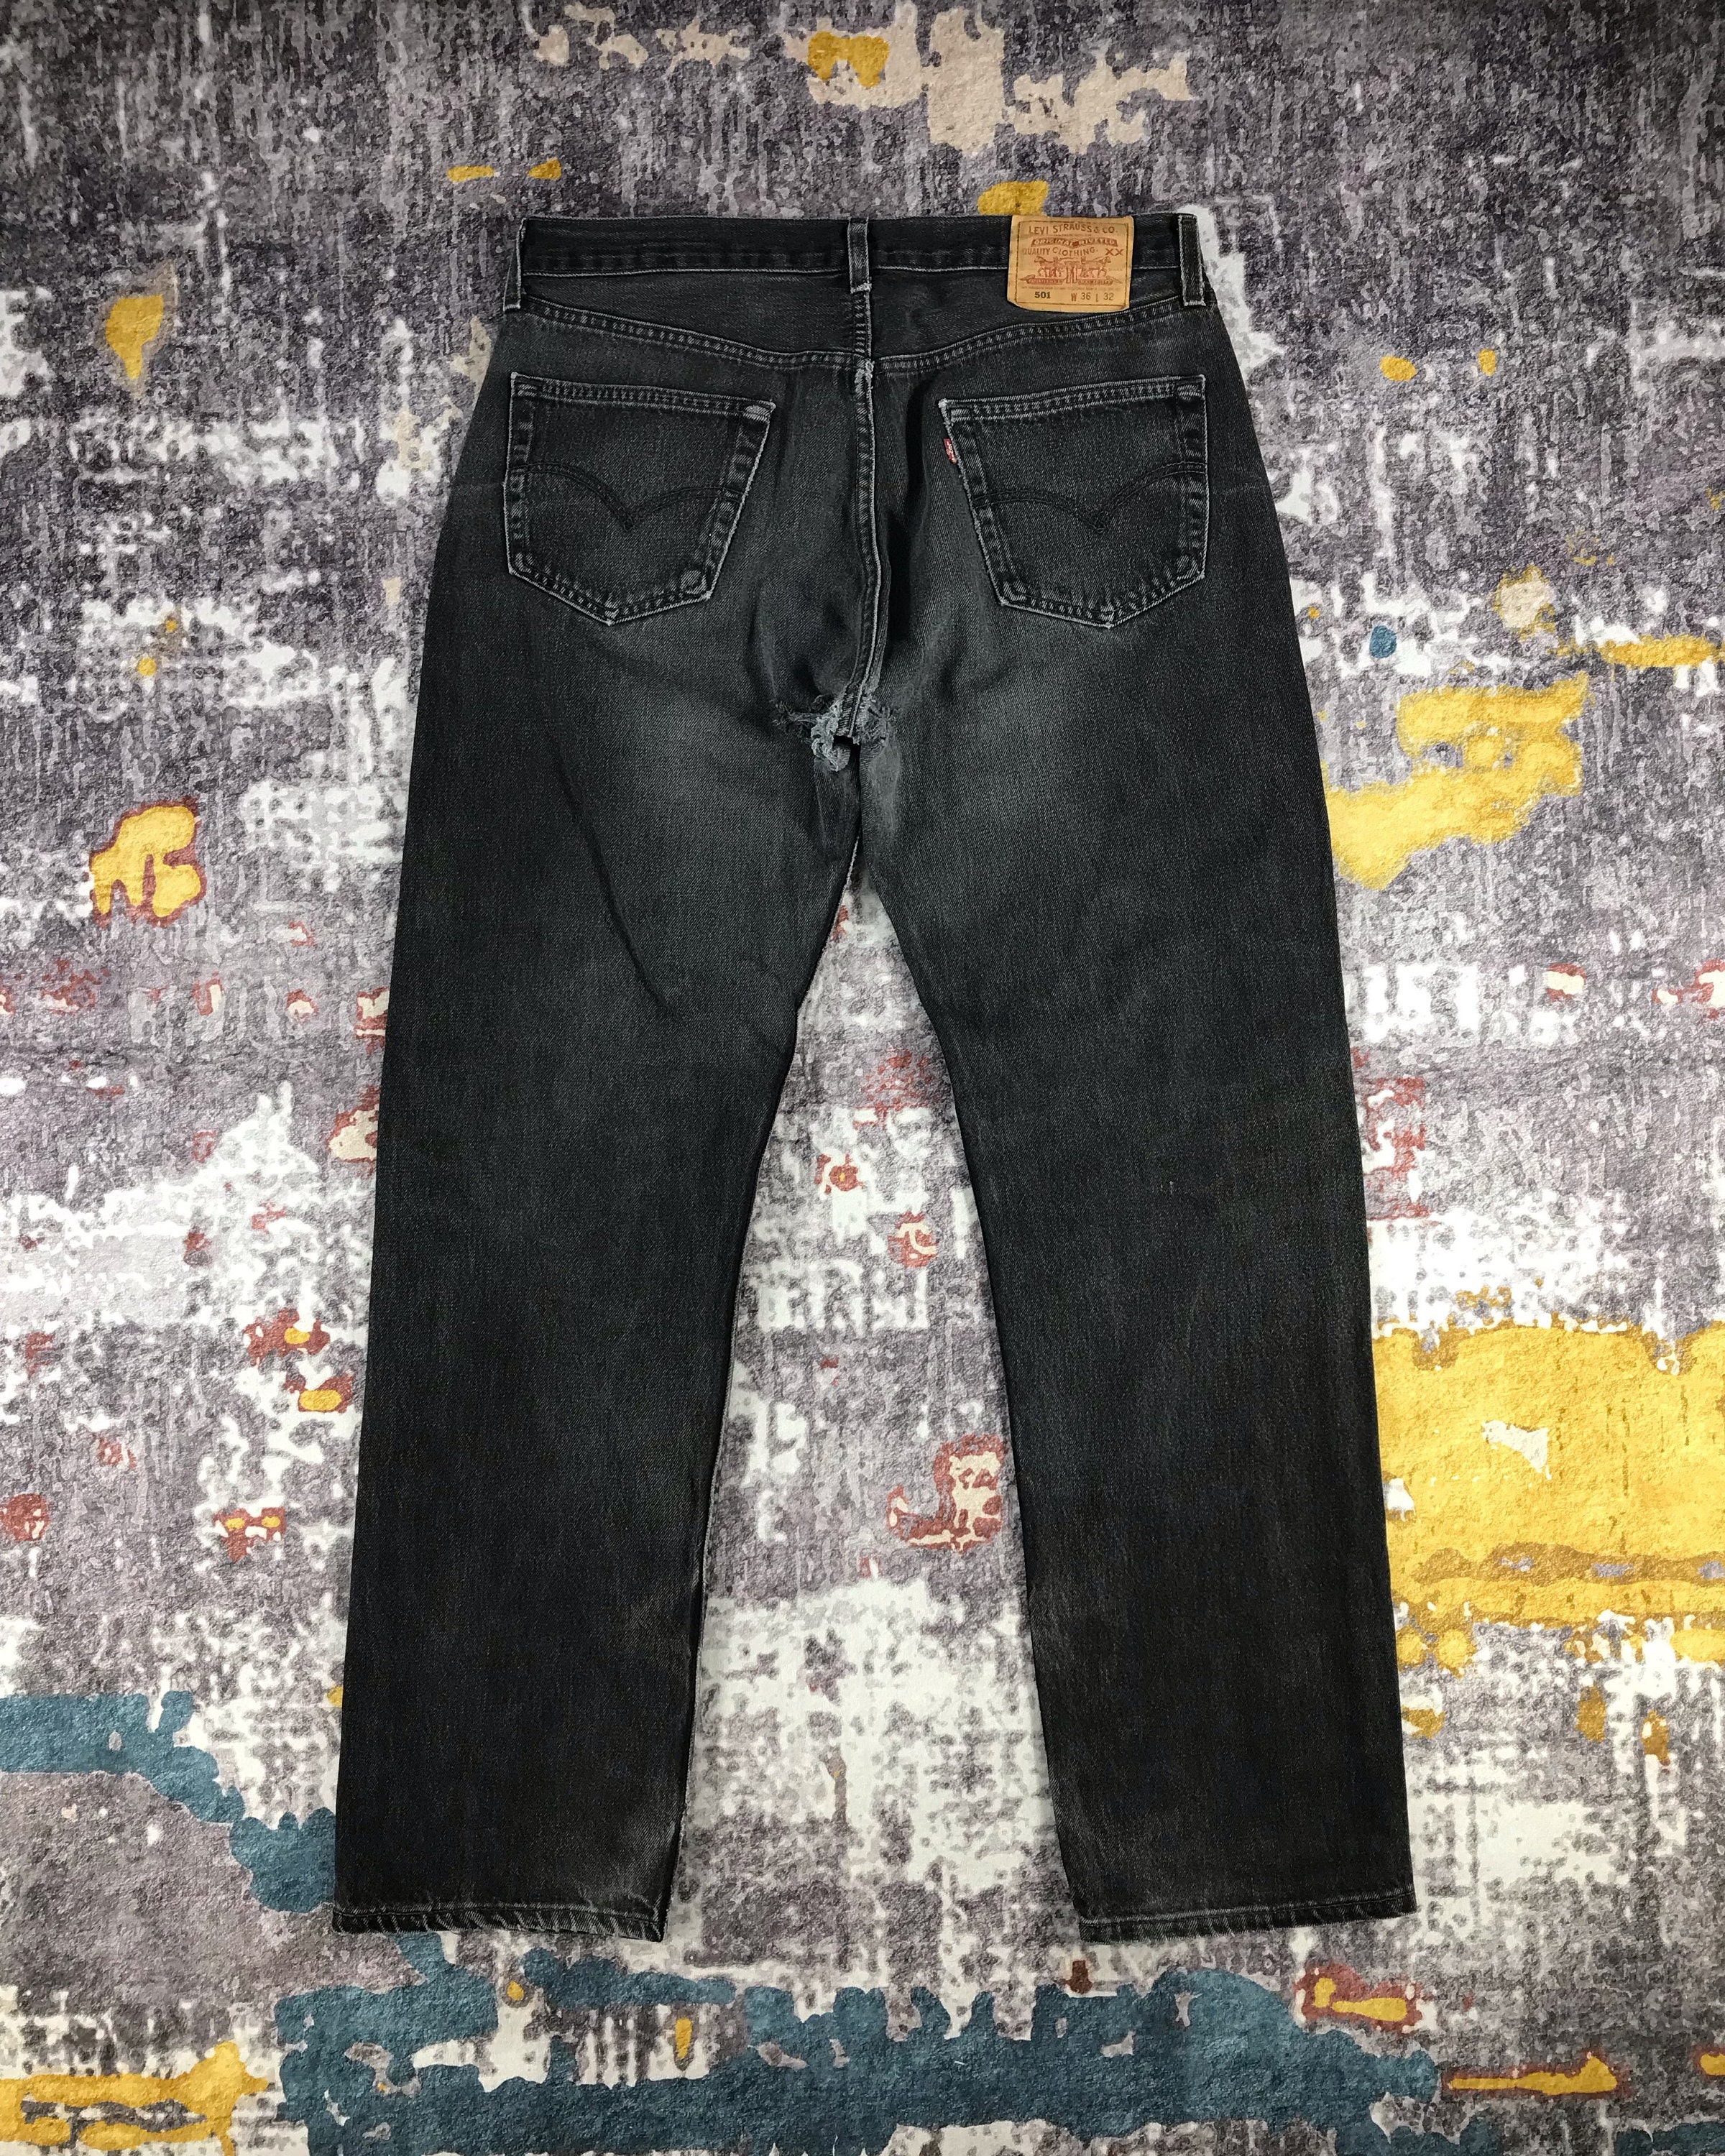 Vintage Levis 501 Ripped Jeans 36x31levis High Waist Vintage - Etsy